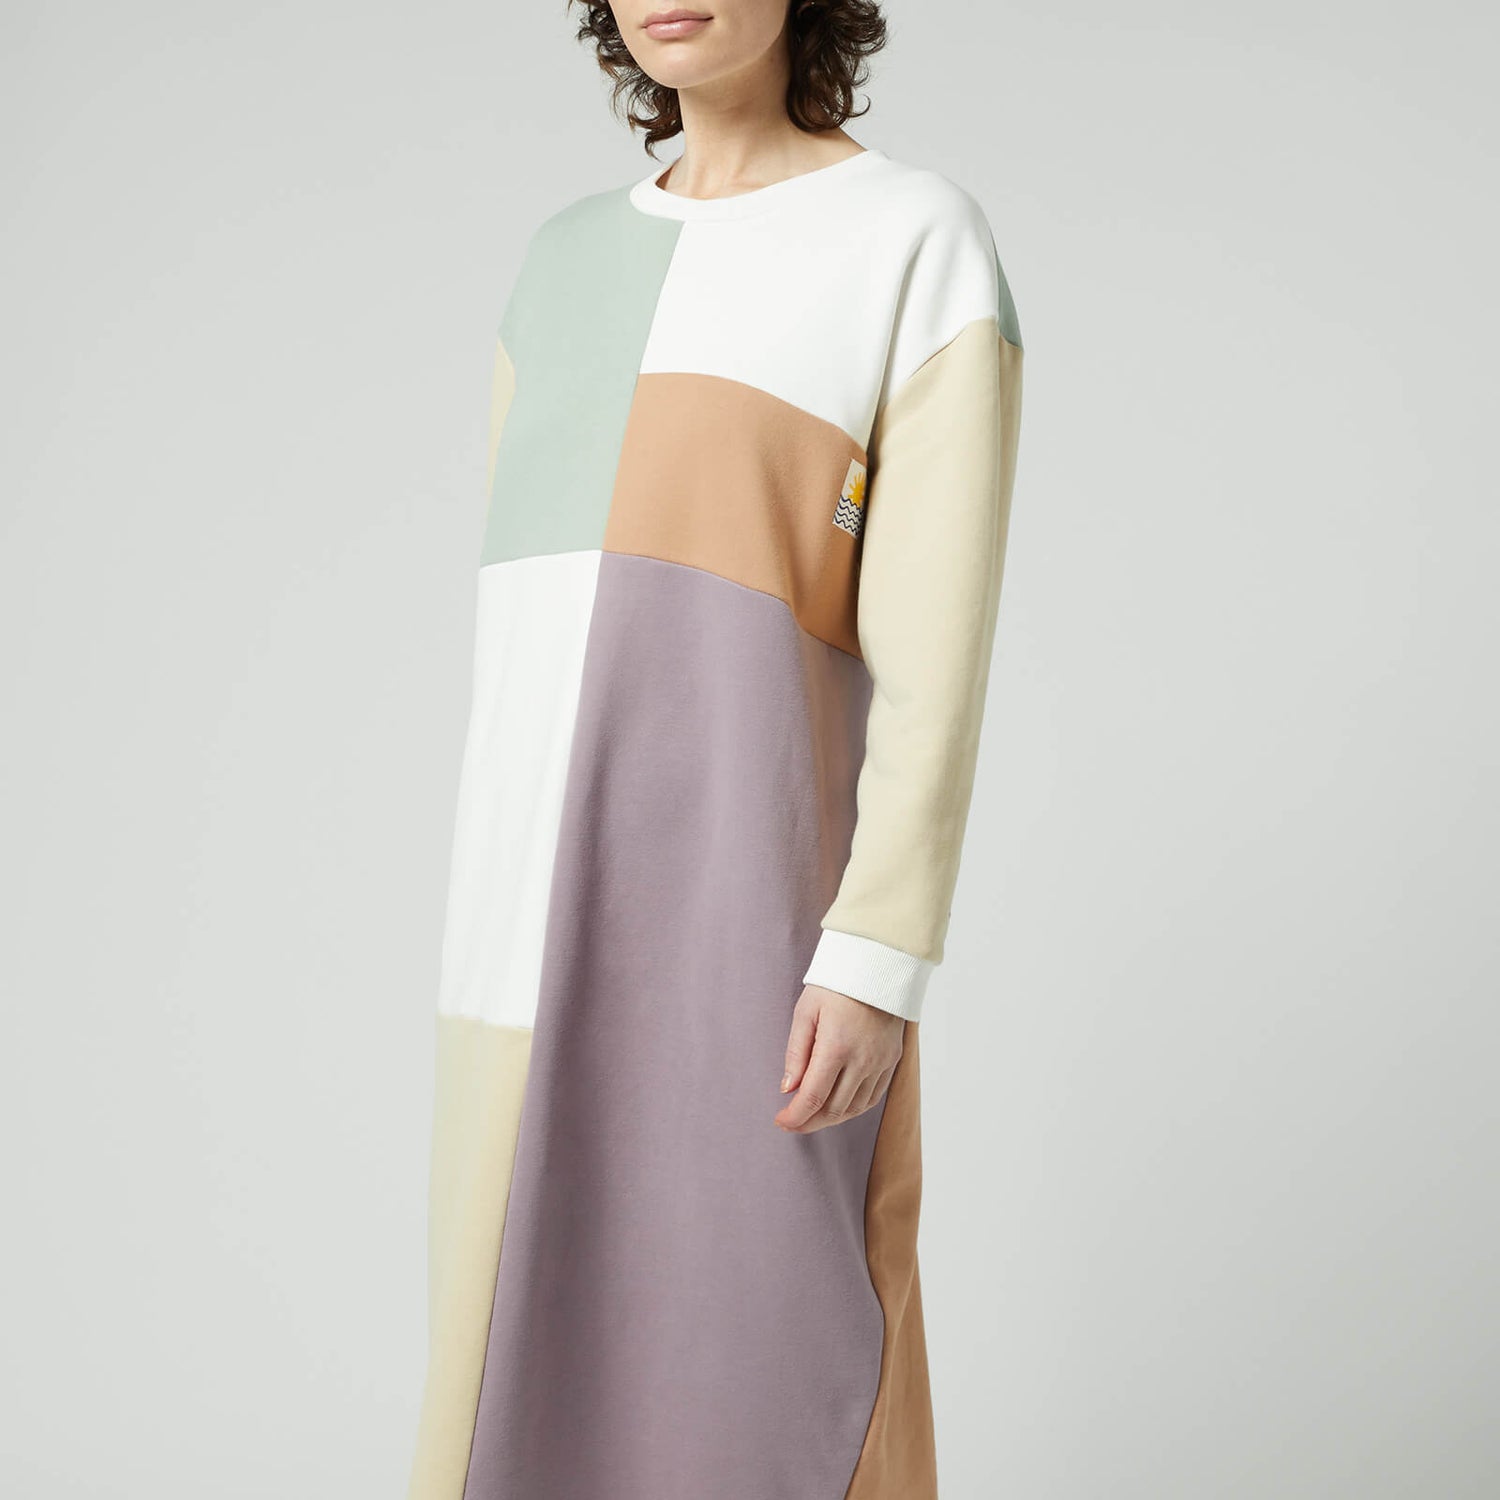 L.F Markey Women's Anders Dress - Pastels - S-M